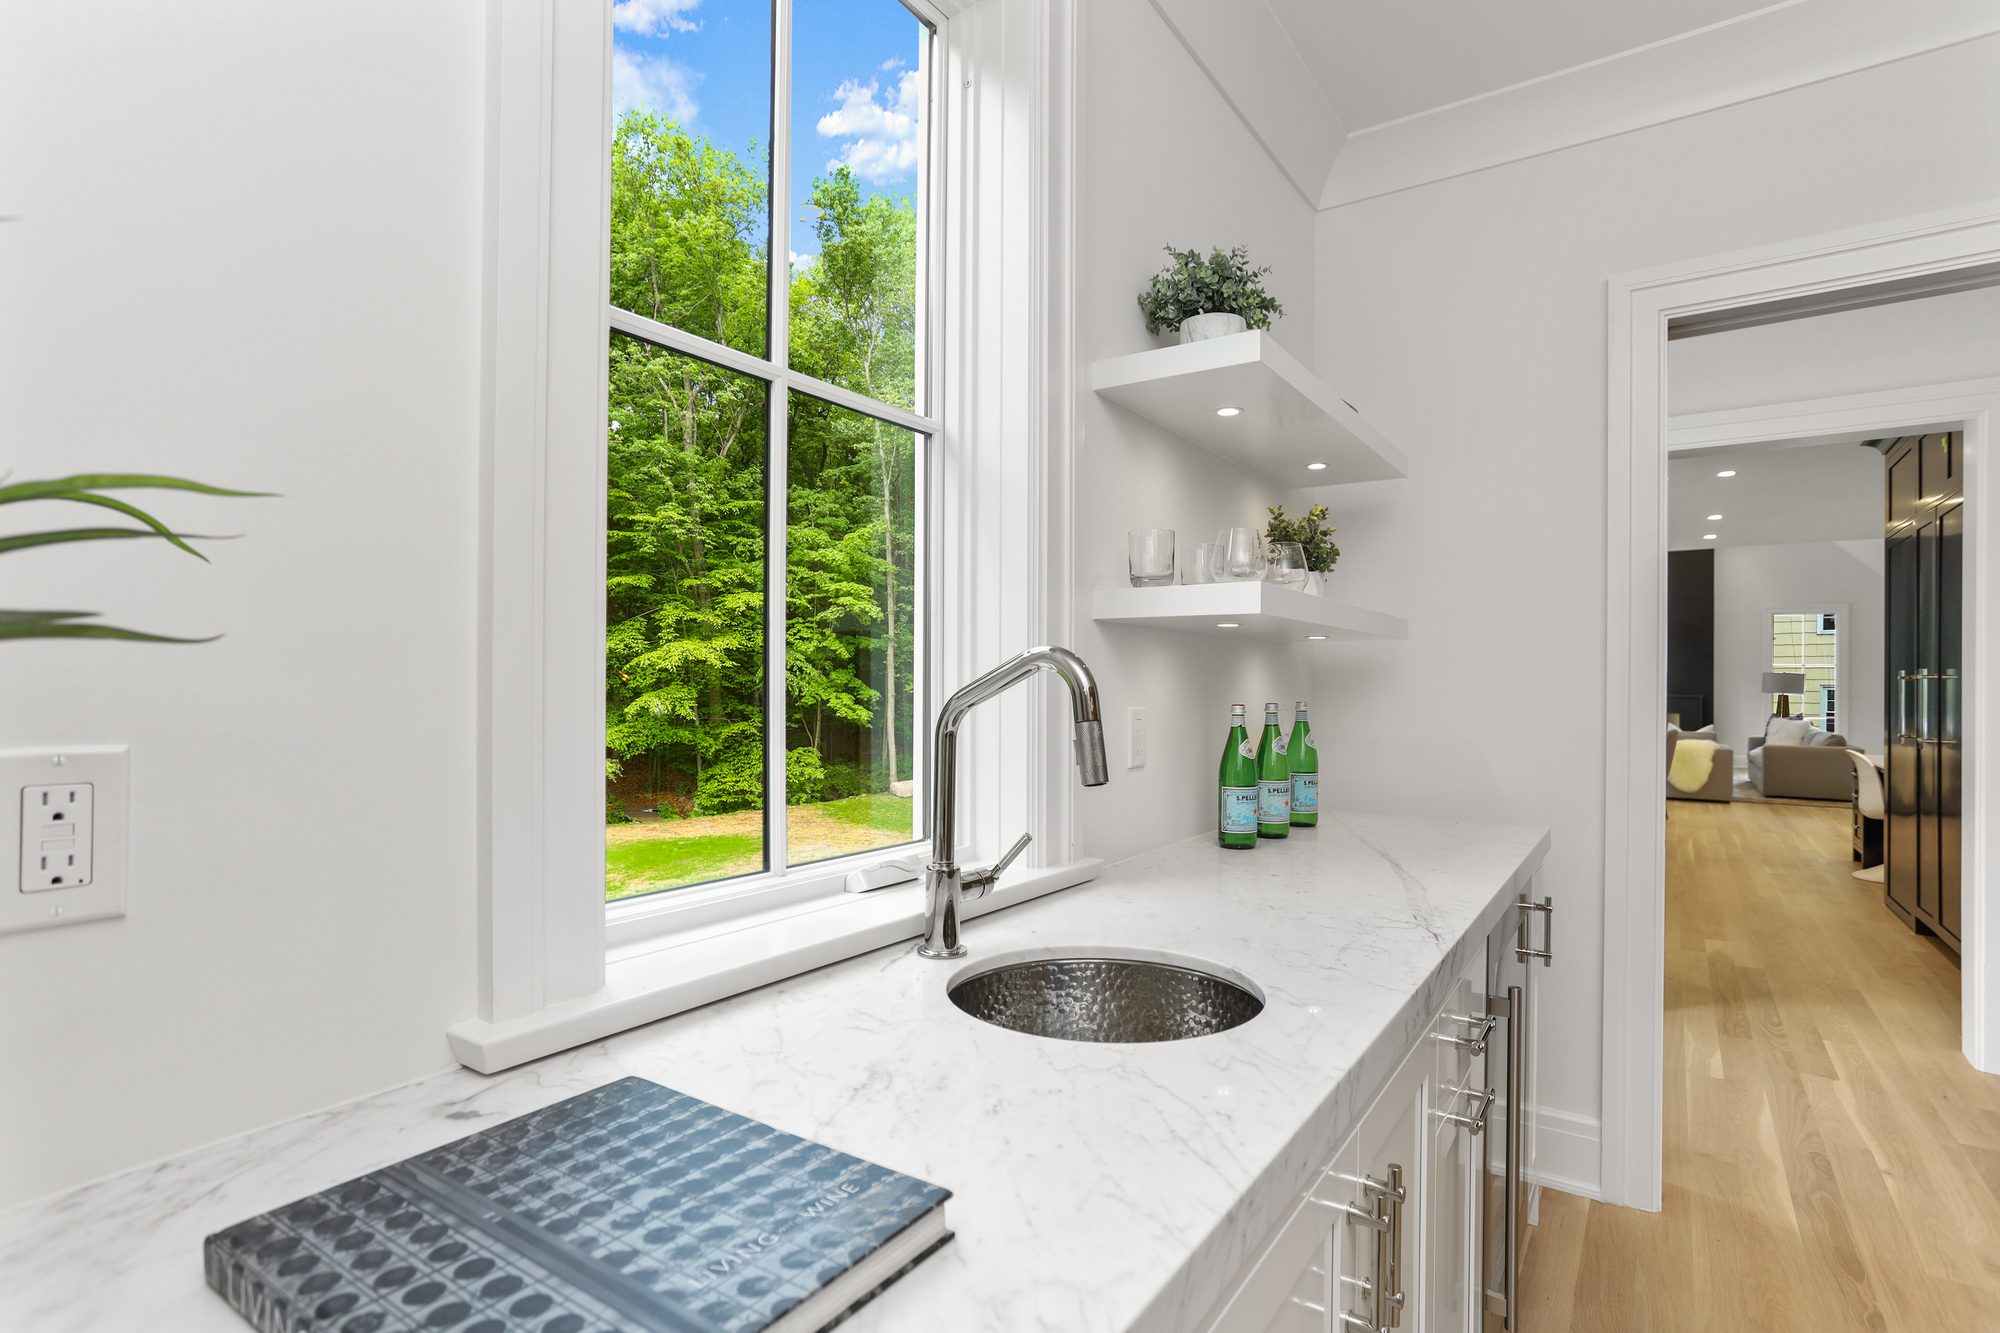 Prep kitchen window with a traditional white frame. quartz countertop. white shelves. No backsplash. small round sink. 